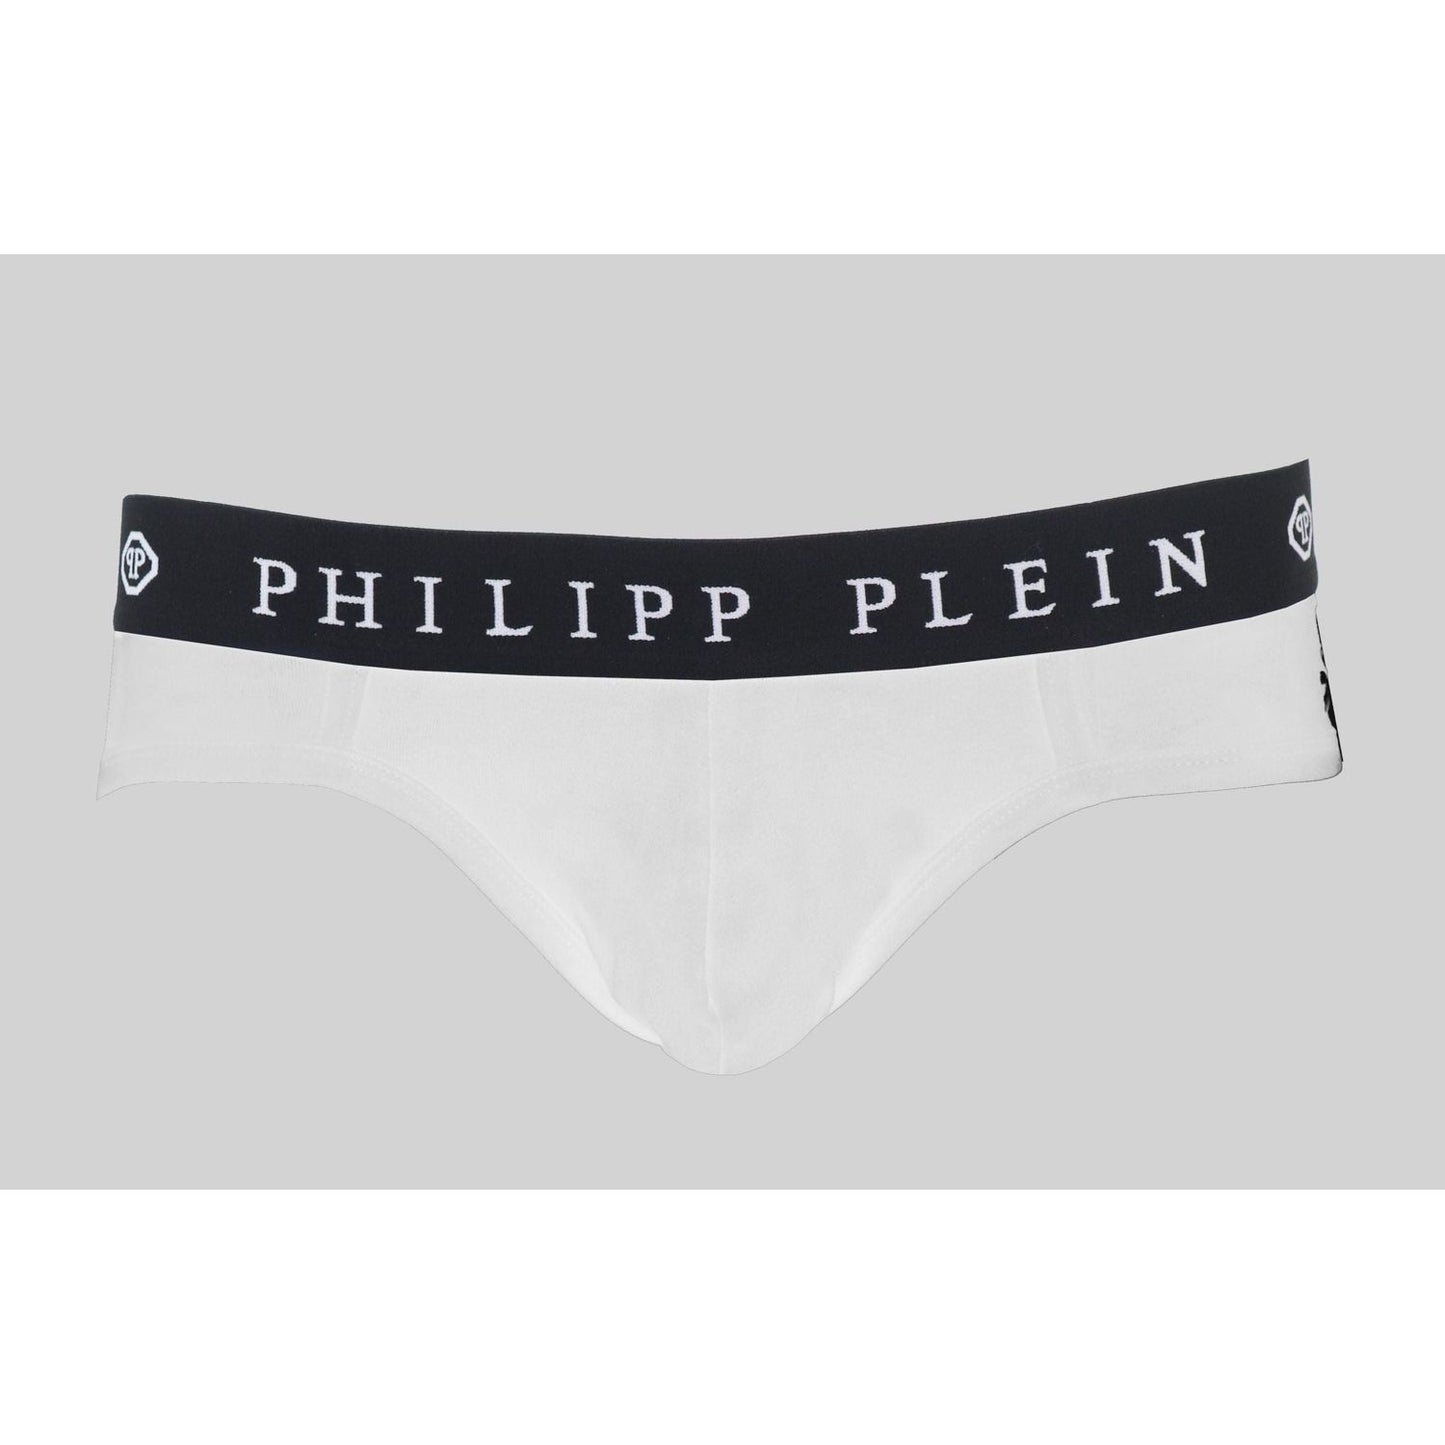 Philipp Plein Elevated White Boxer Shorts Twin-Pack slipbipack-bianco-philipp-plein-underwear product-6416-1920781533-1-scaled-67147f7c-5d6.jpg